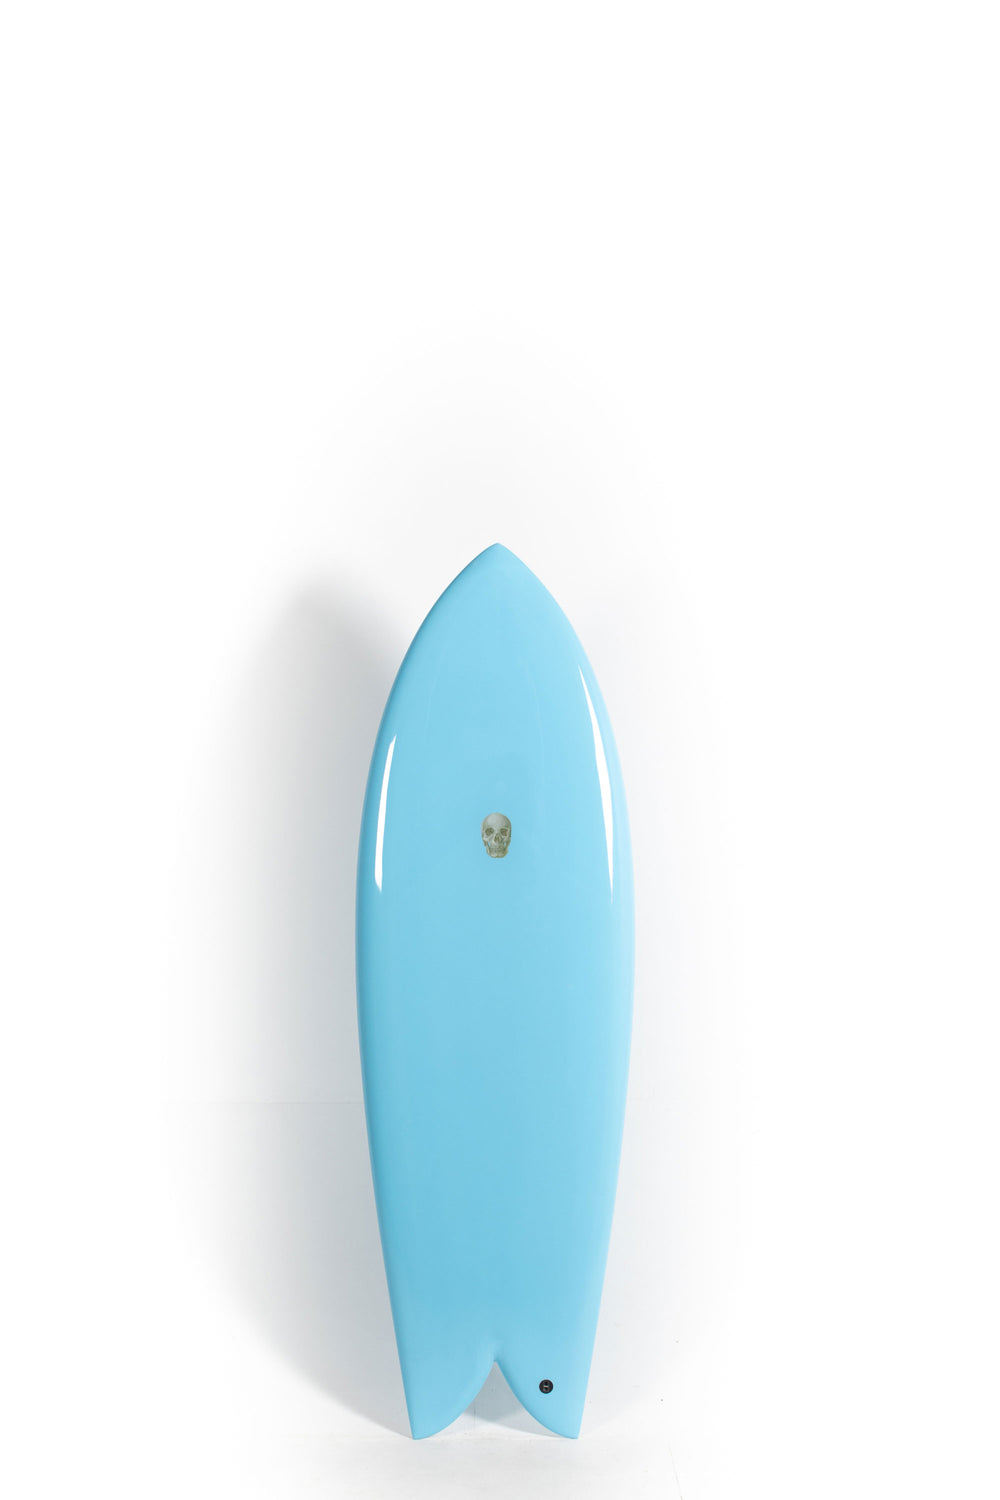 Pukas Surf Shop - Christenson Surfboards - CHRIS FISH - 5'7